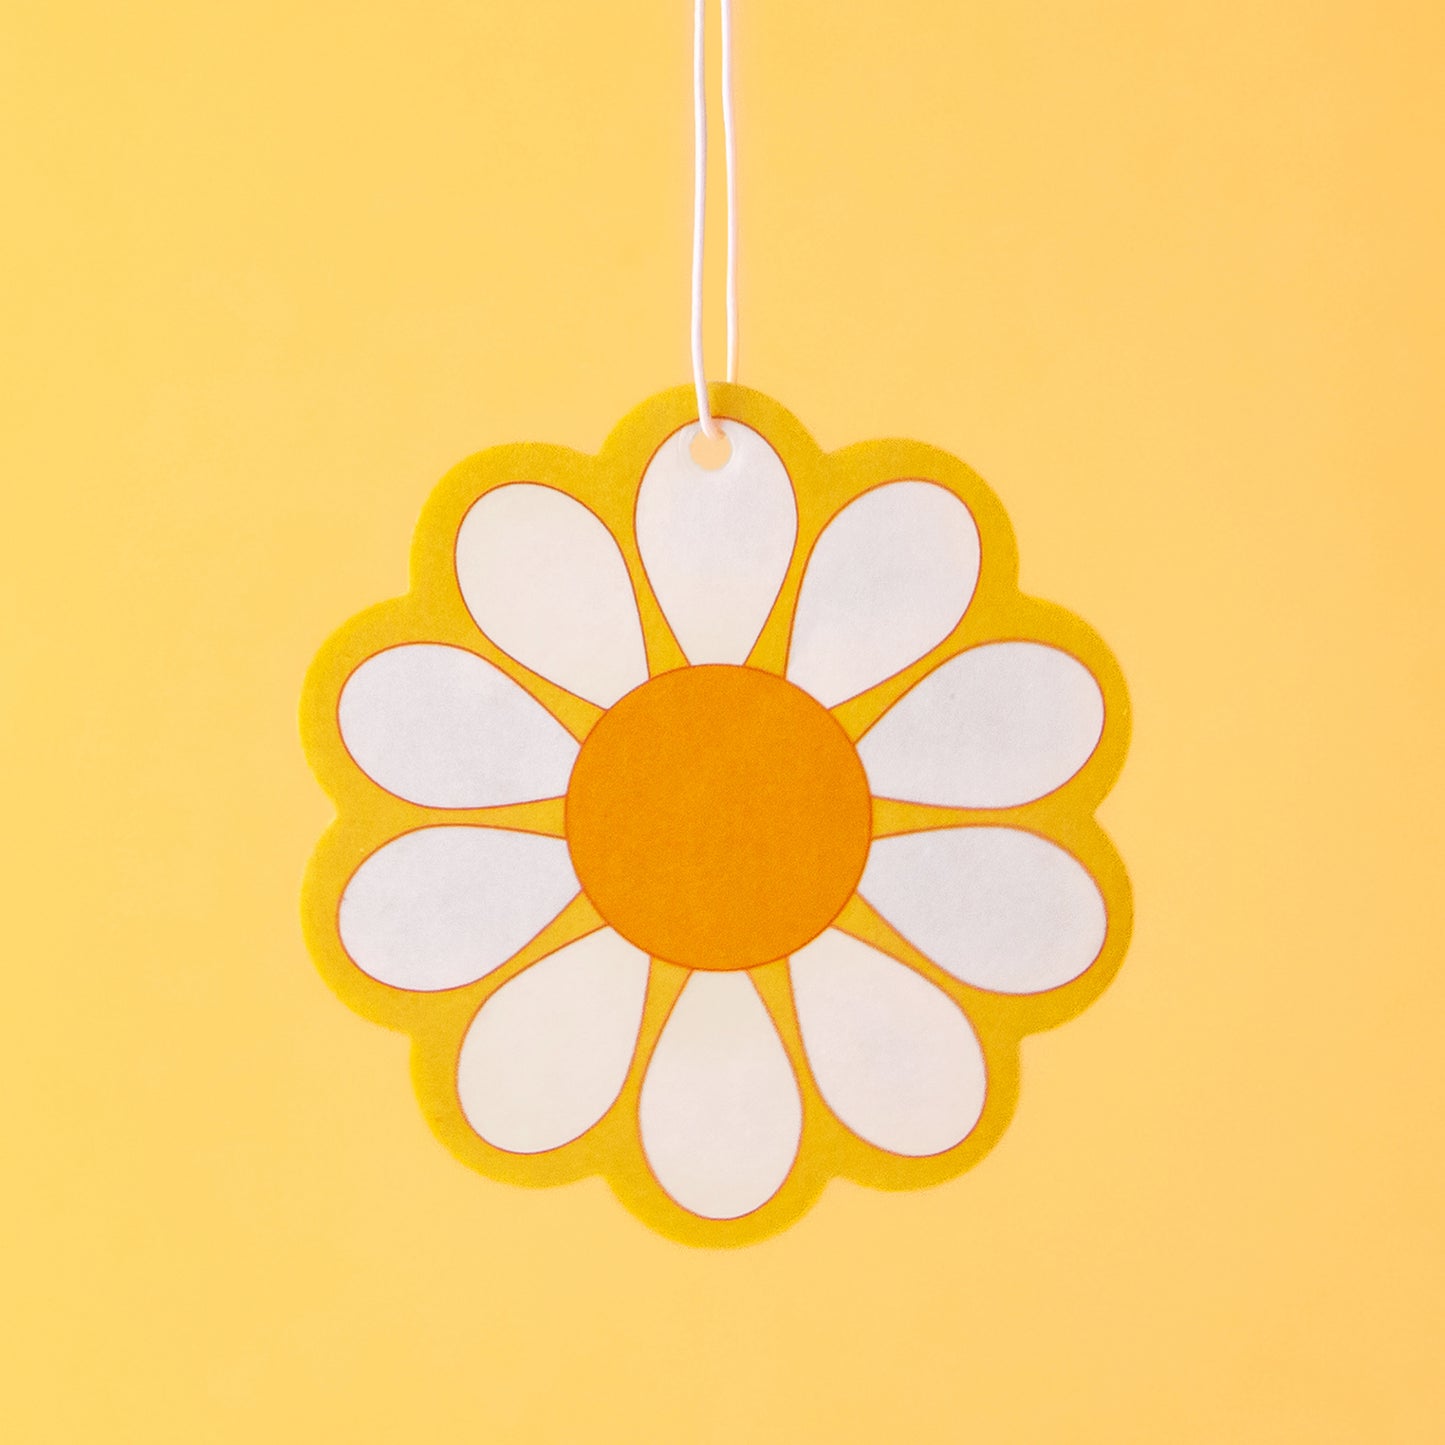 A yellow, white and orange daisy shaped air freshener. 